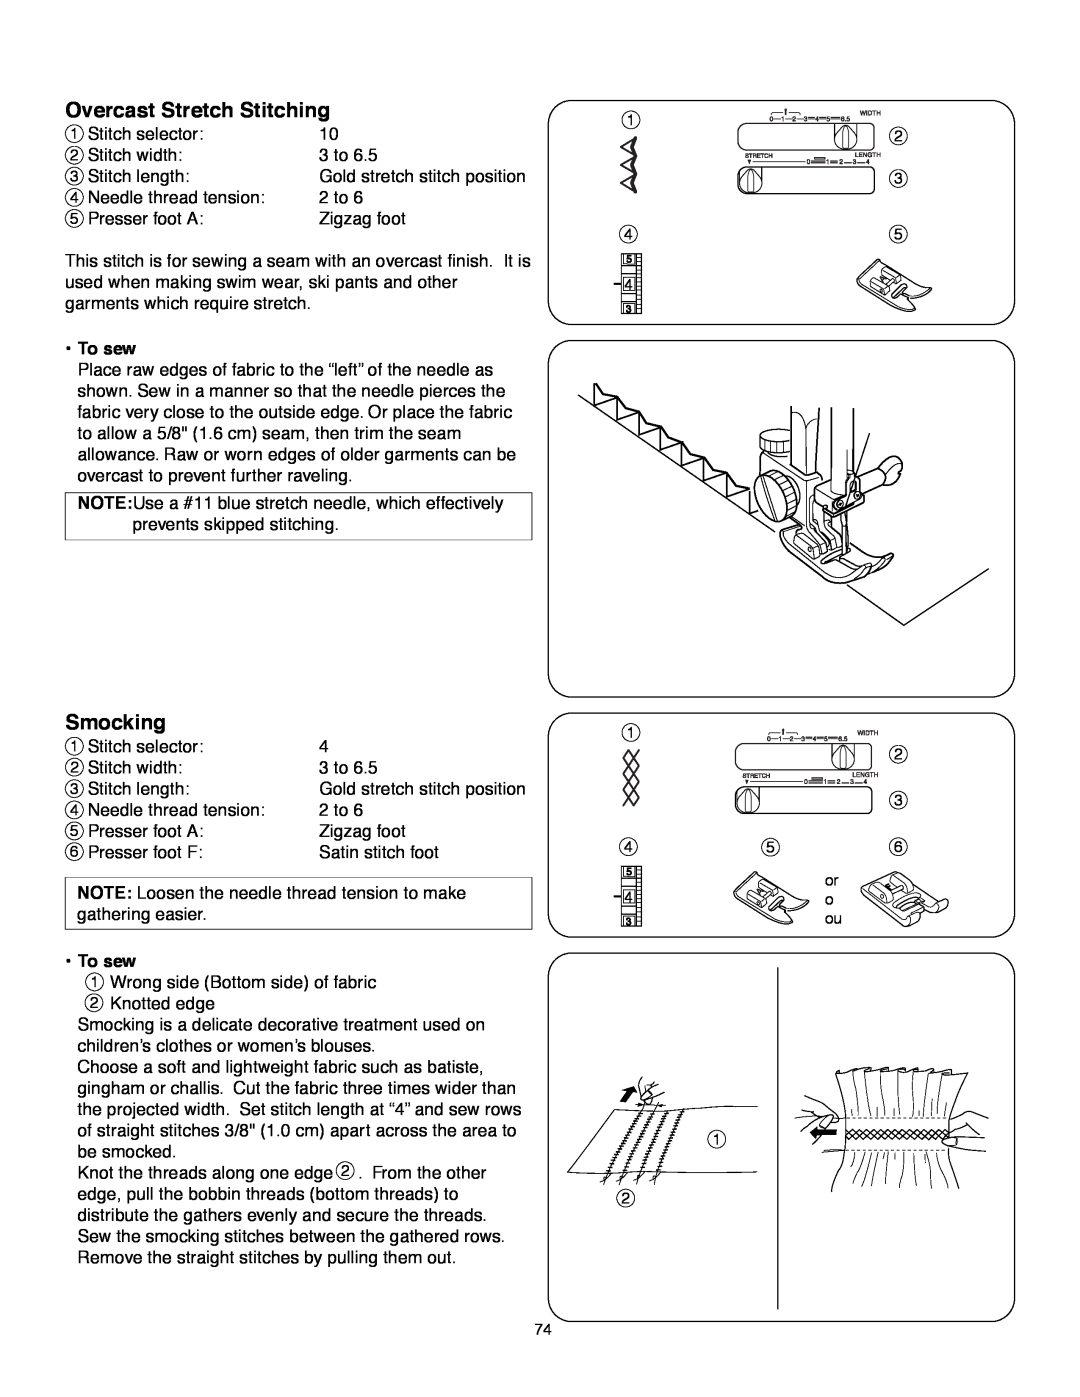 Janome MS-5027 instruction manual Overcast Stretch Stitching, Smocking, To sew 